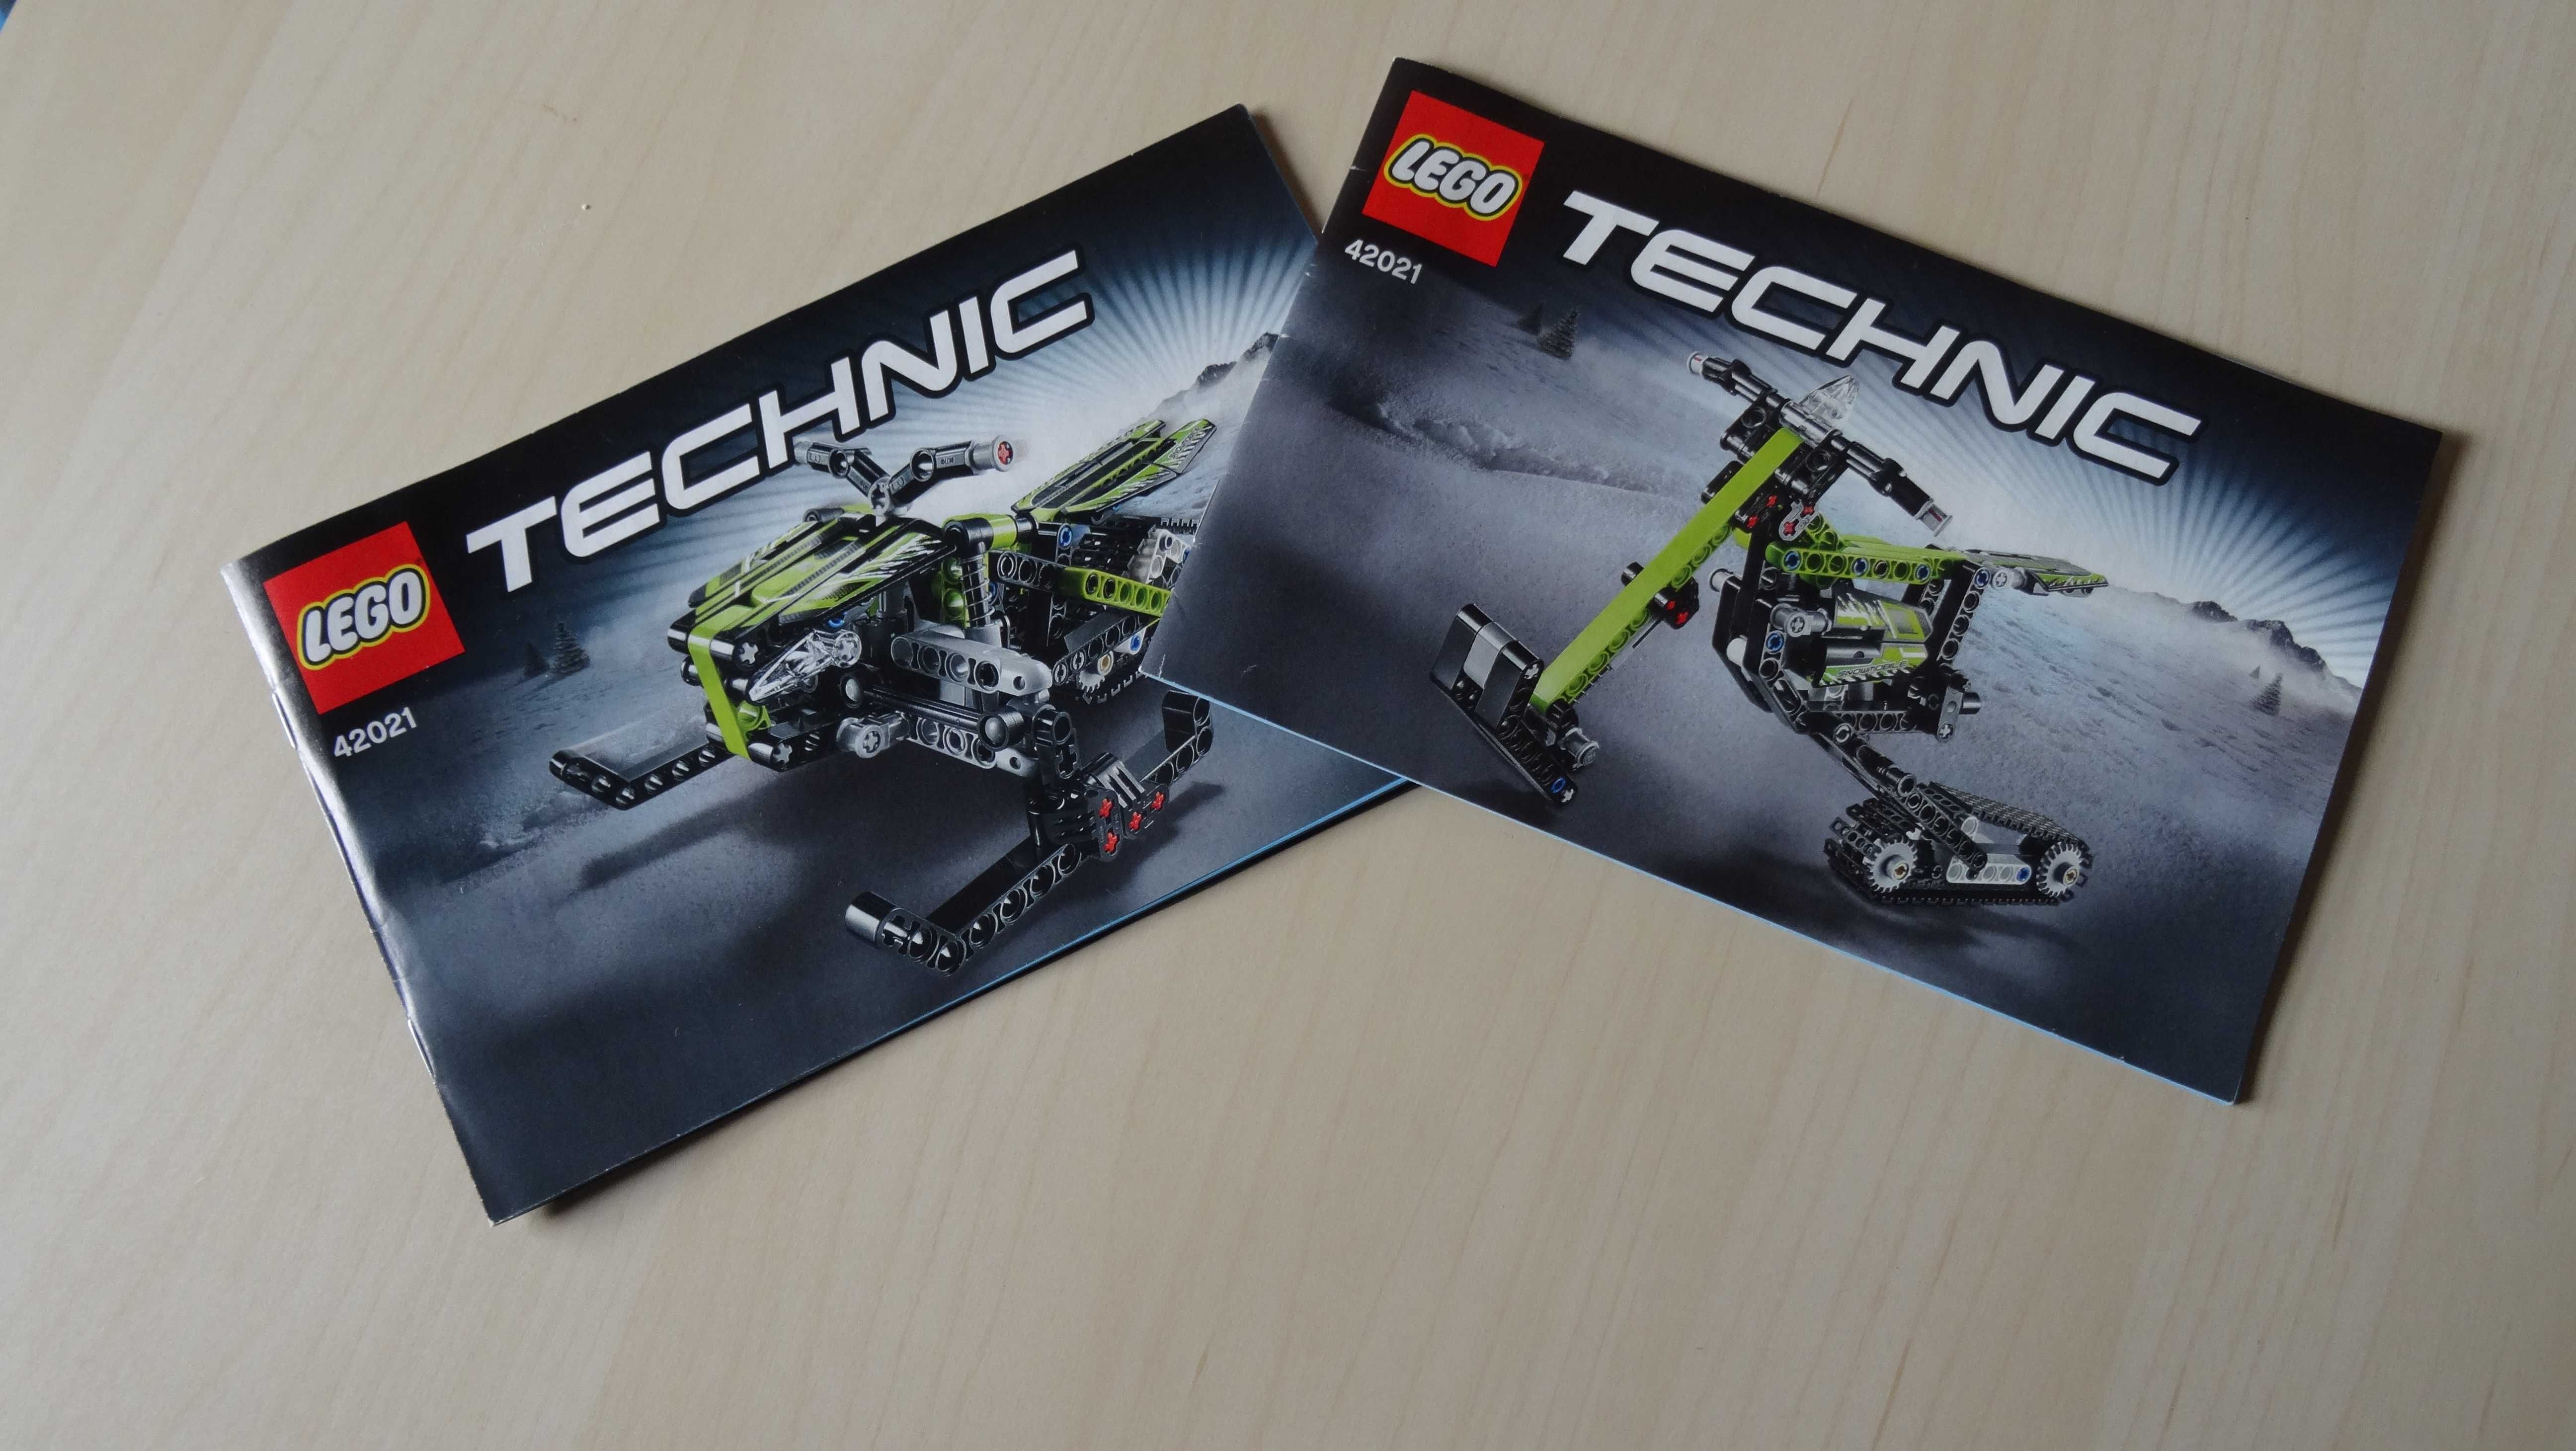 Lego Technic 42021 skuter